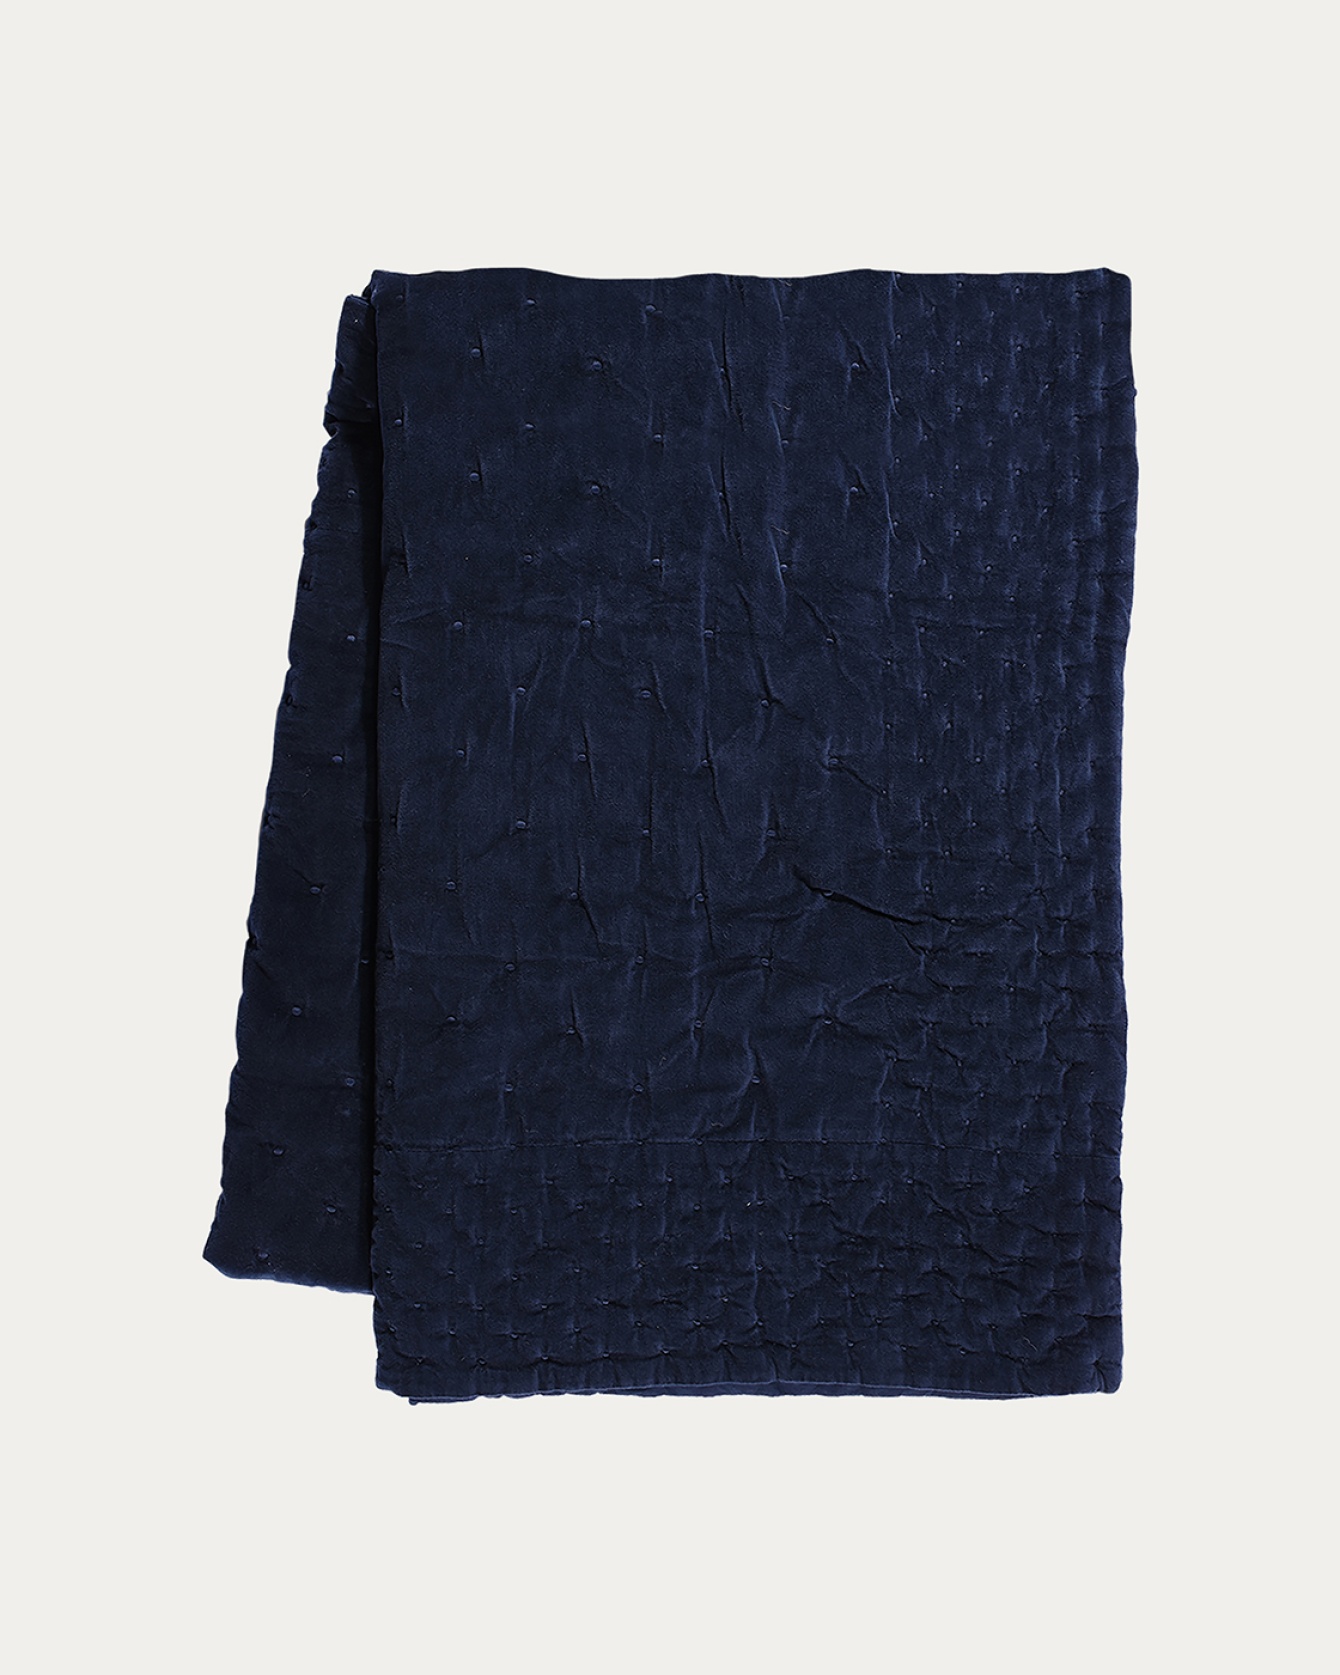 PAOLO Bedspread 270x260 cm Ink blue